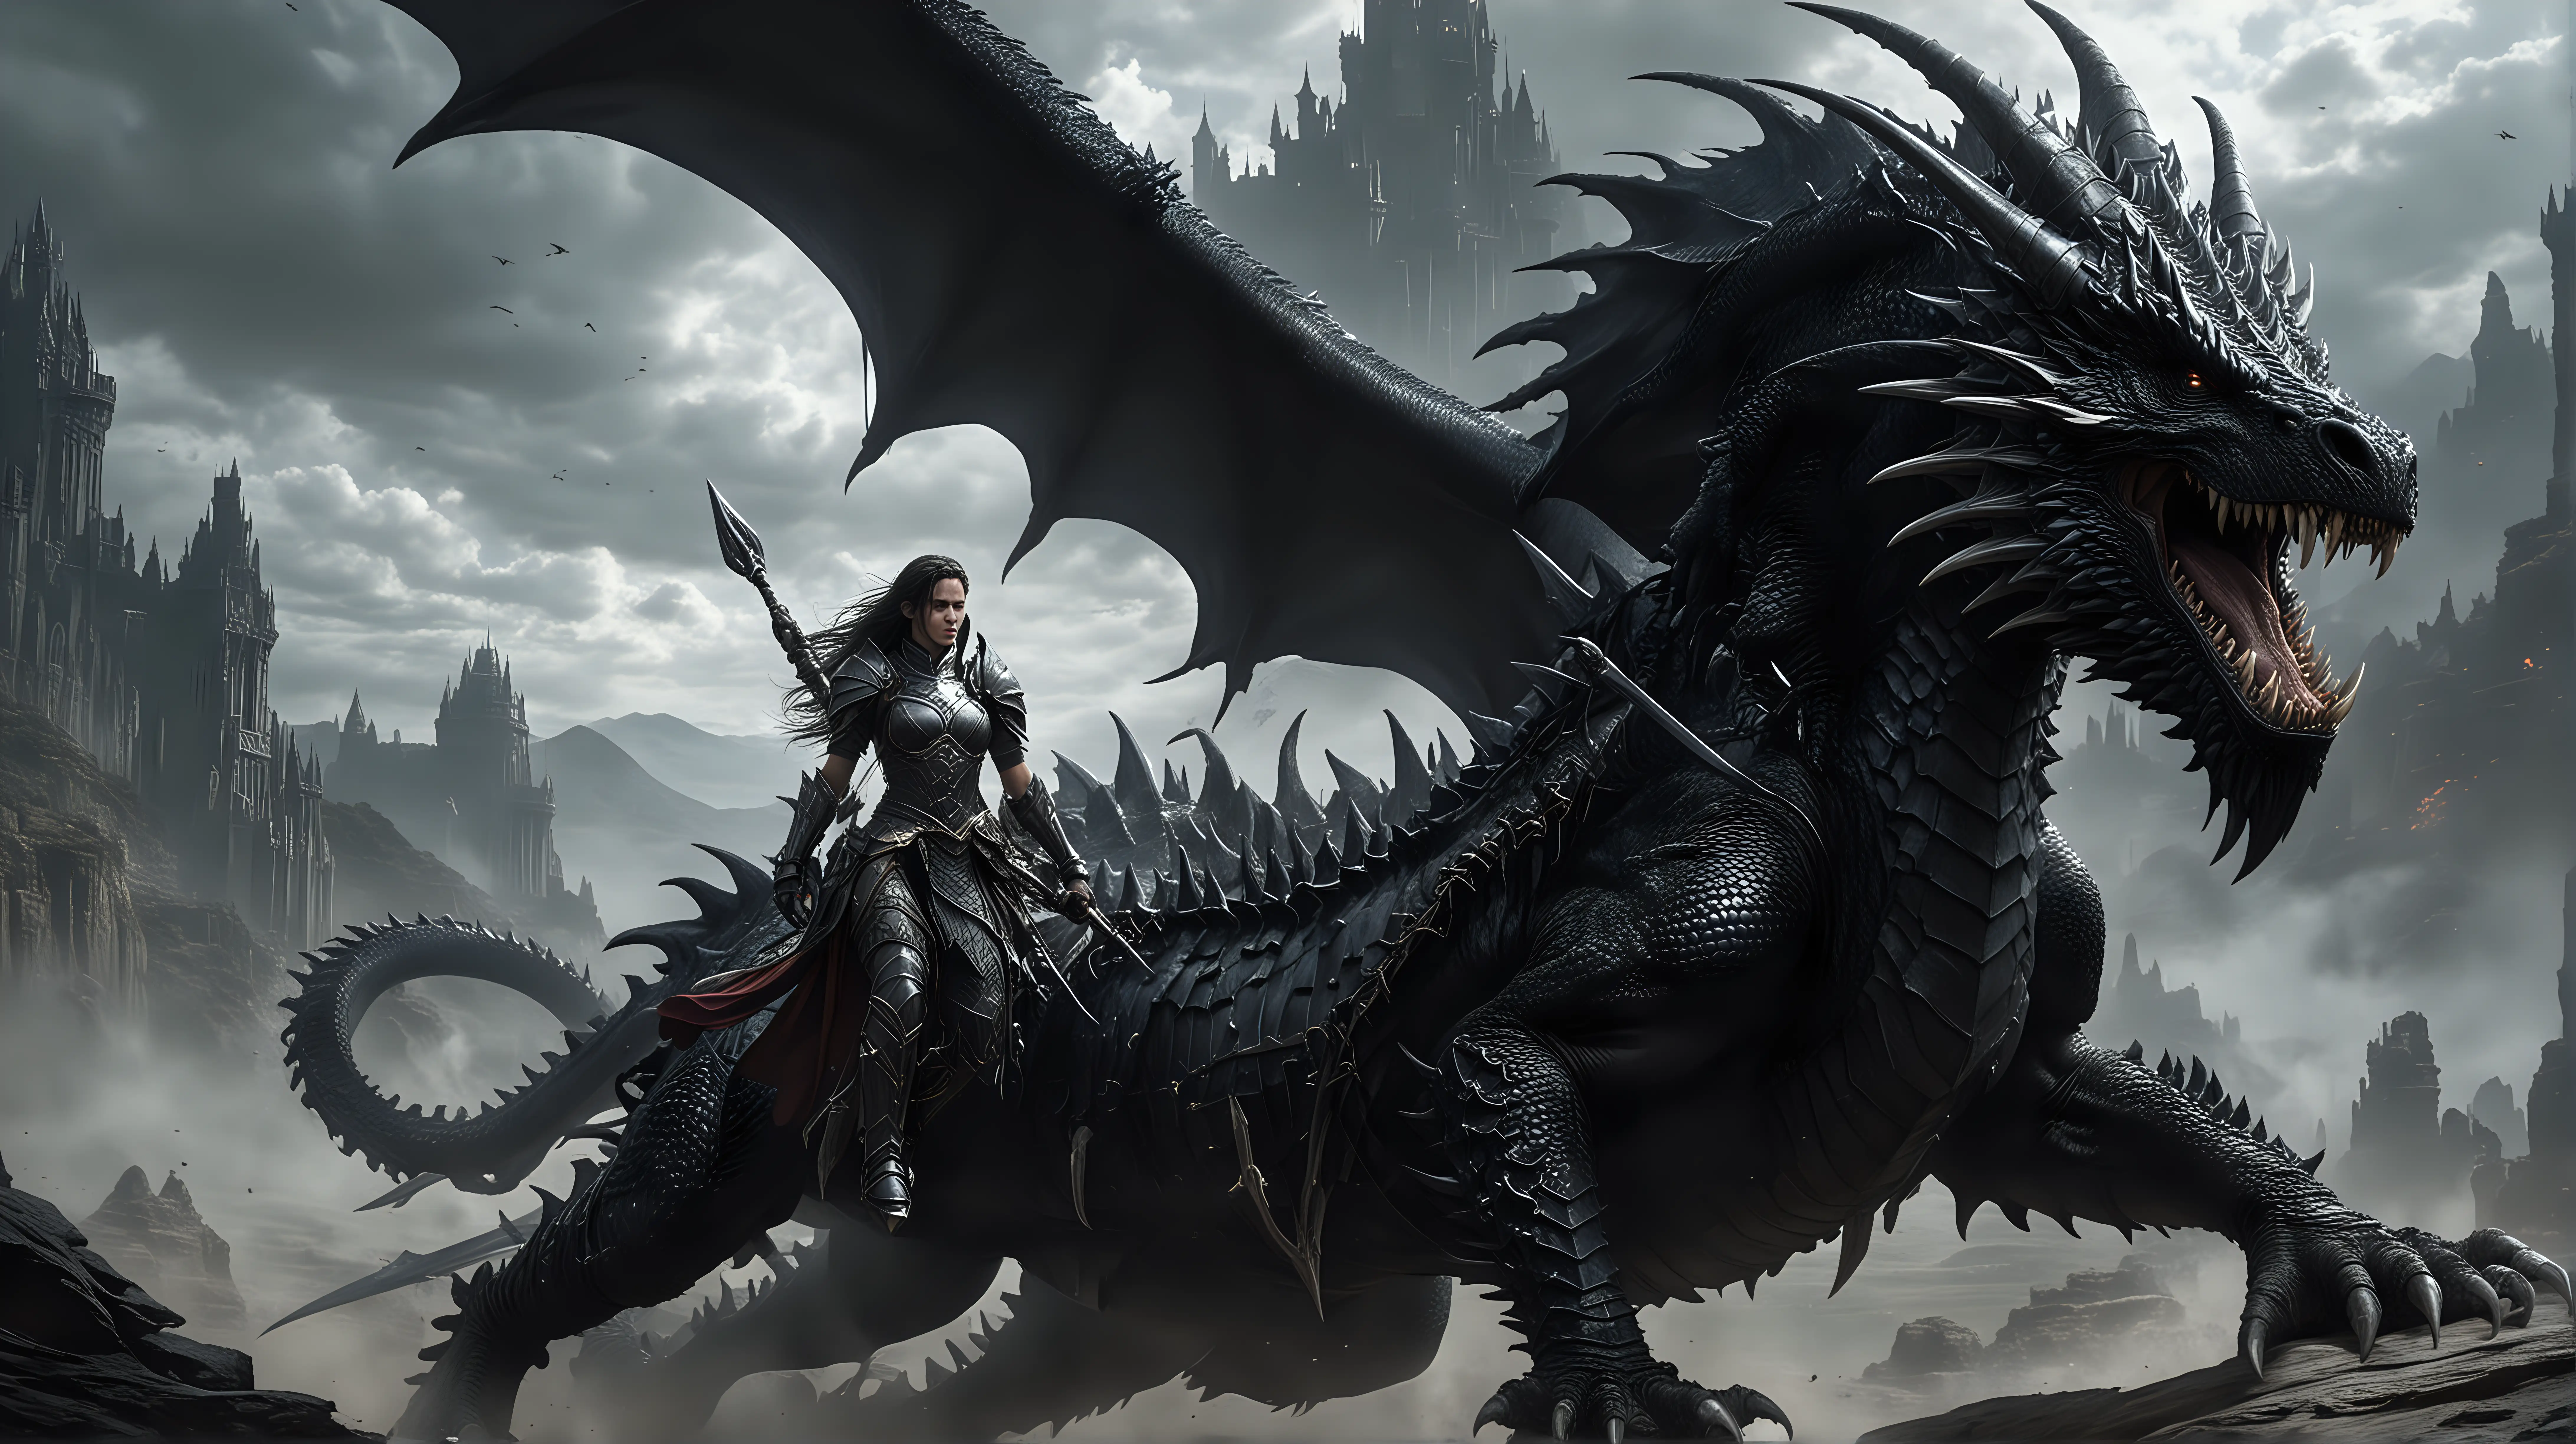 Armored Warrior Riding Black Dragon in High Fantasy Scene